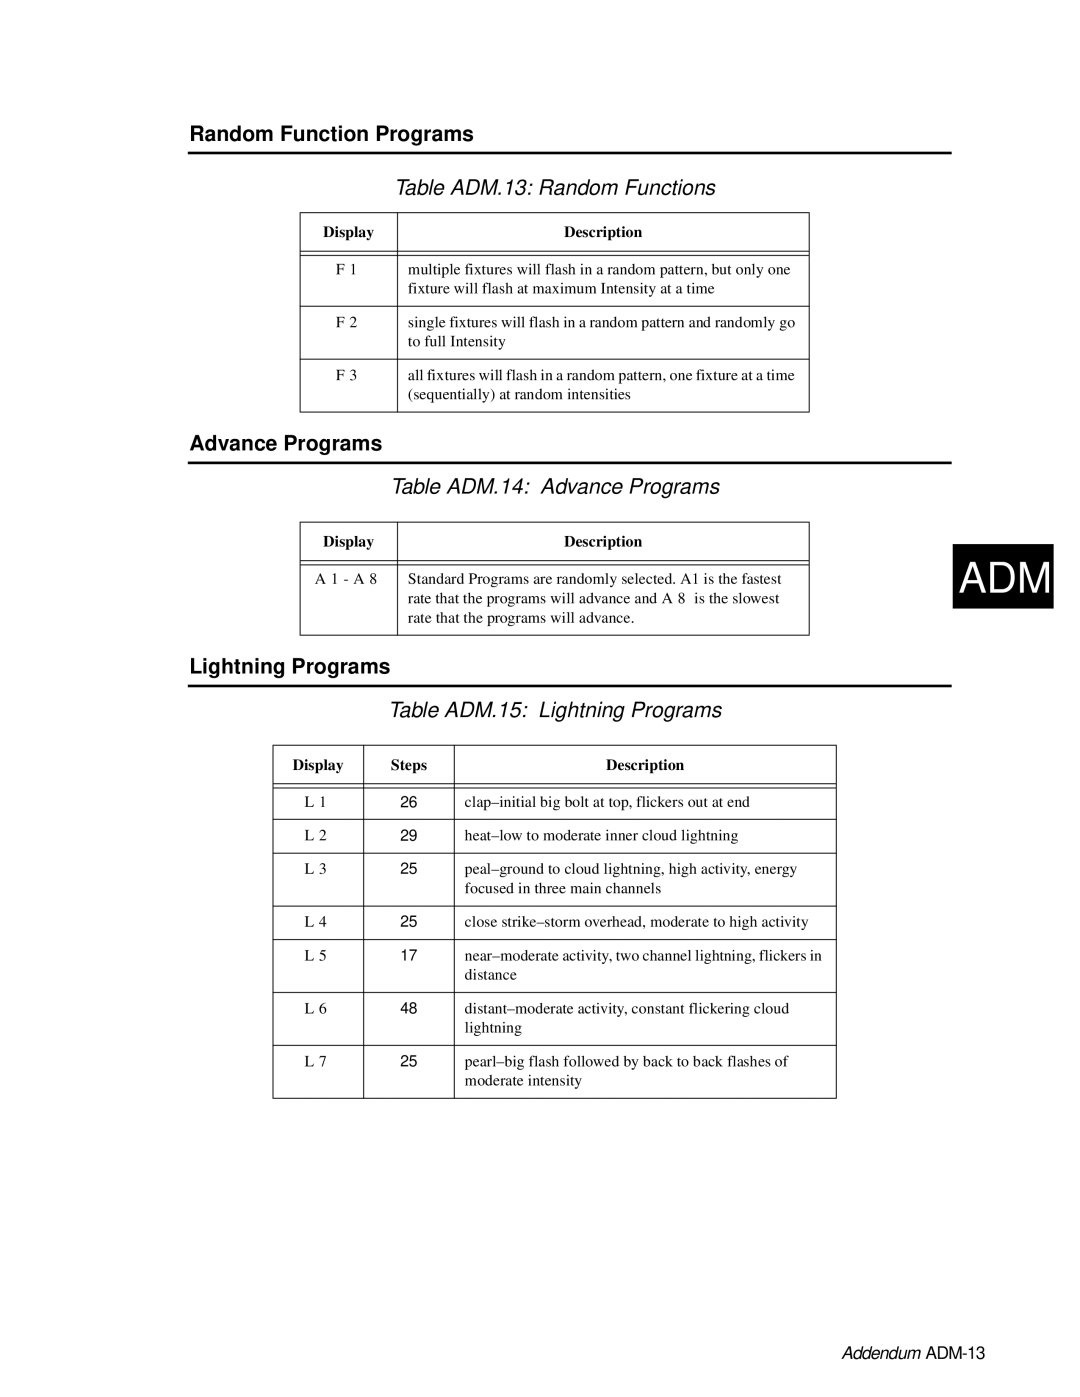 High End Systems AF1000 Table ADM.13 Random Functions, Table ADM.14 Advance Programs, Table ADM.15 Lightning Programs 